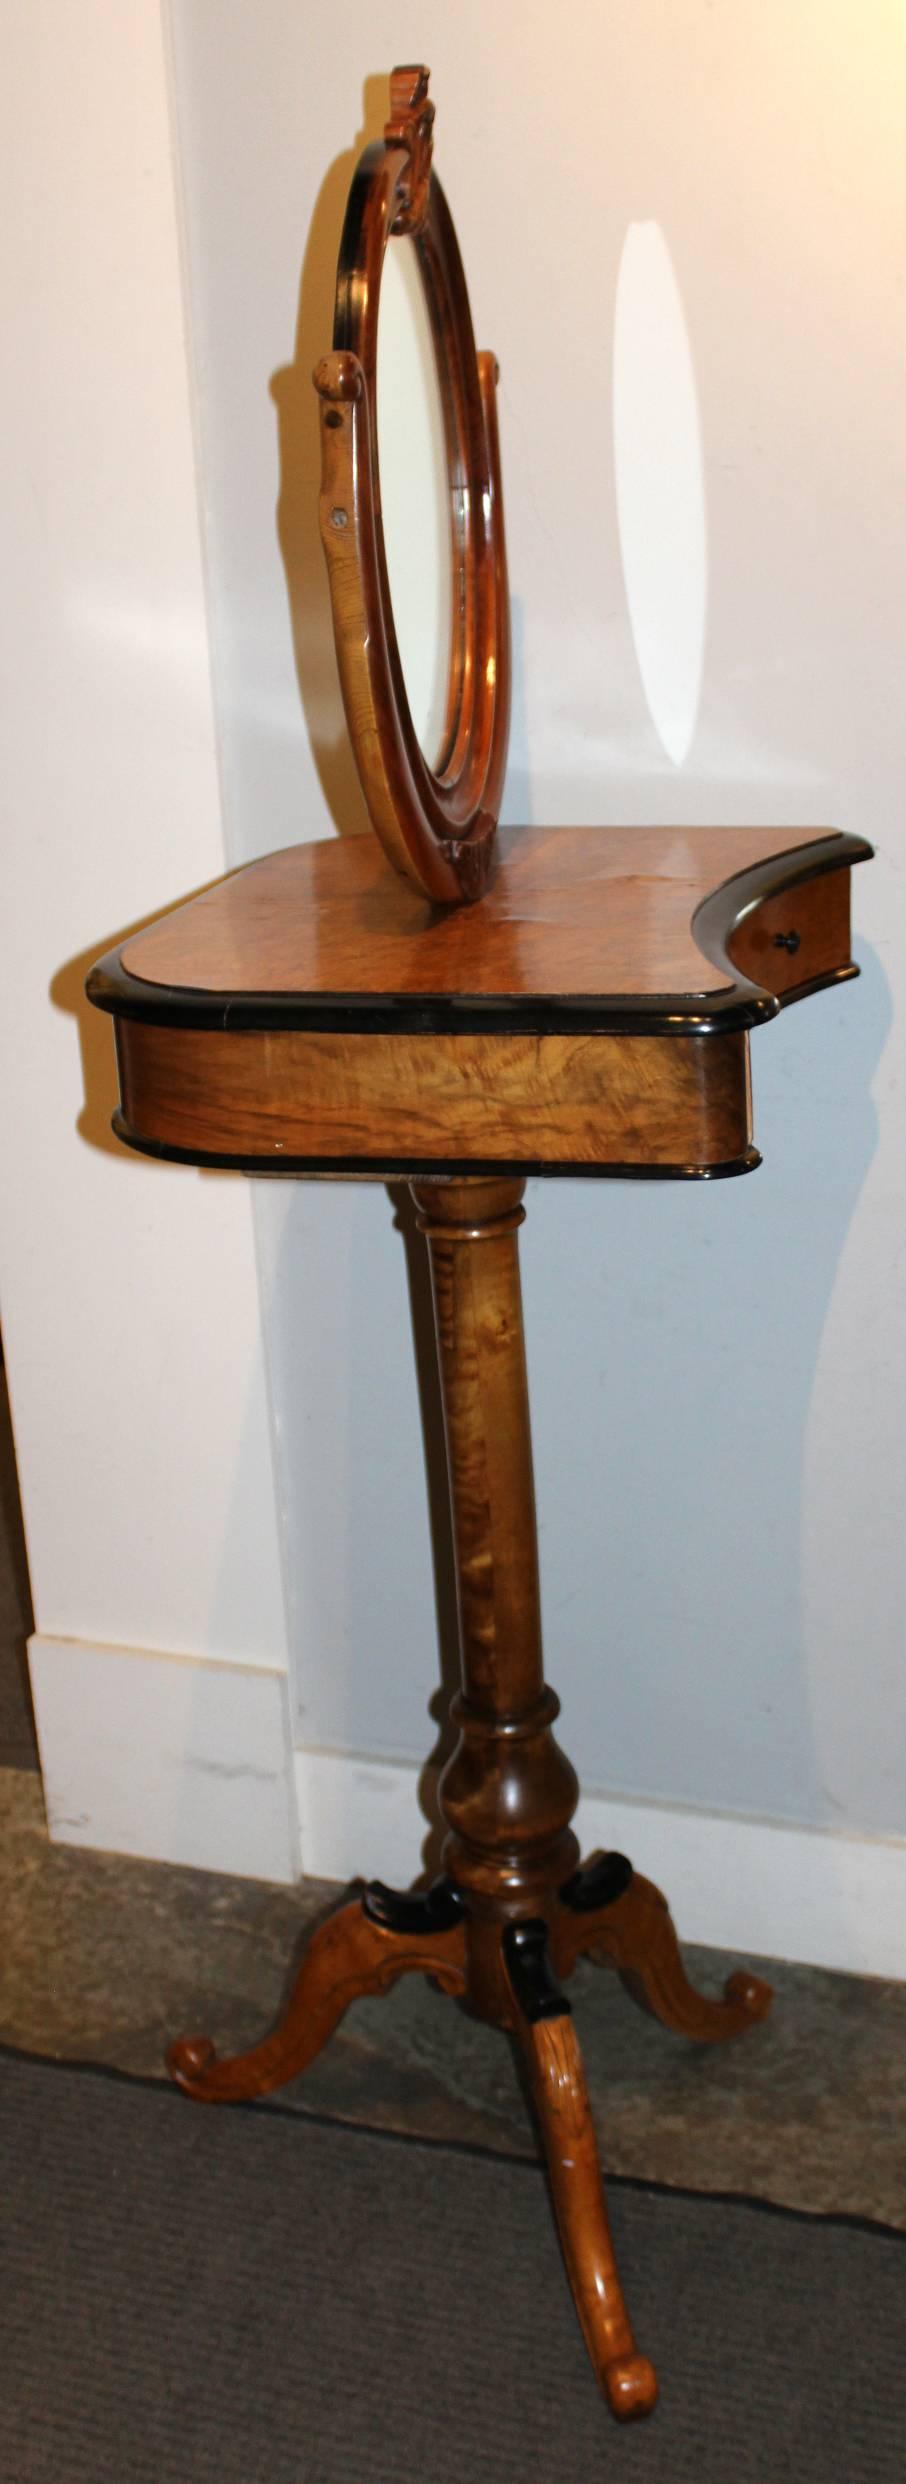 Carved 19th Century Biedermeier Birdseye Maple and Ebonized Mahogany Shaving Stand